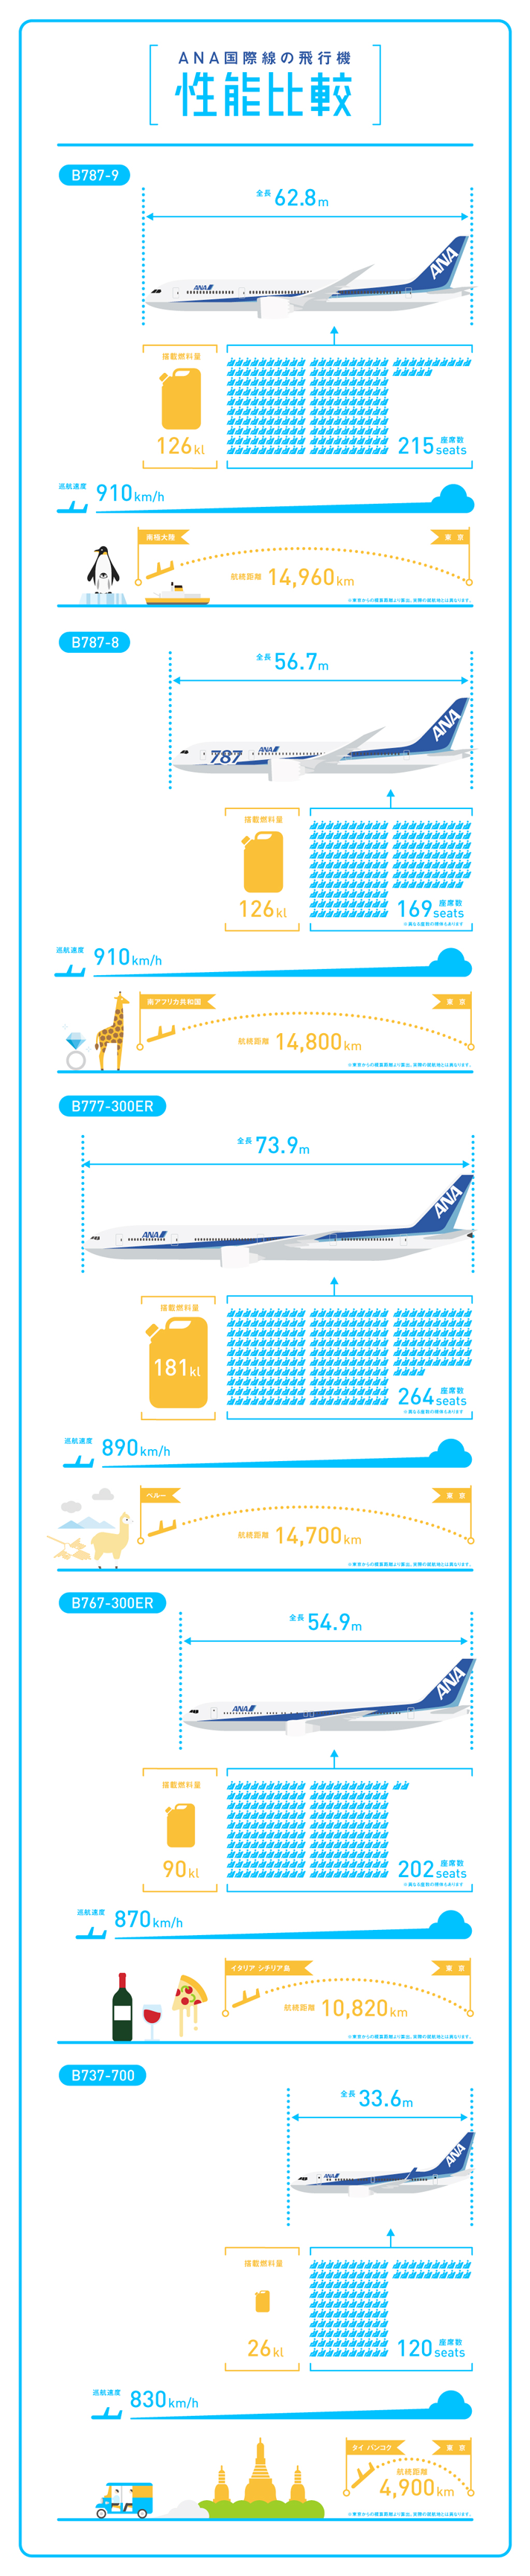 ANA国際線の飛行機の性能比較